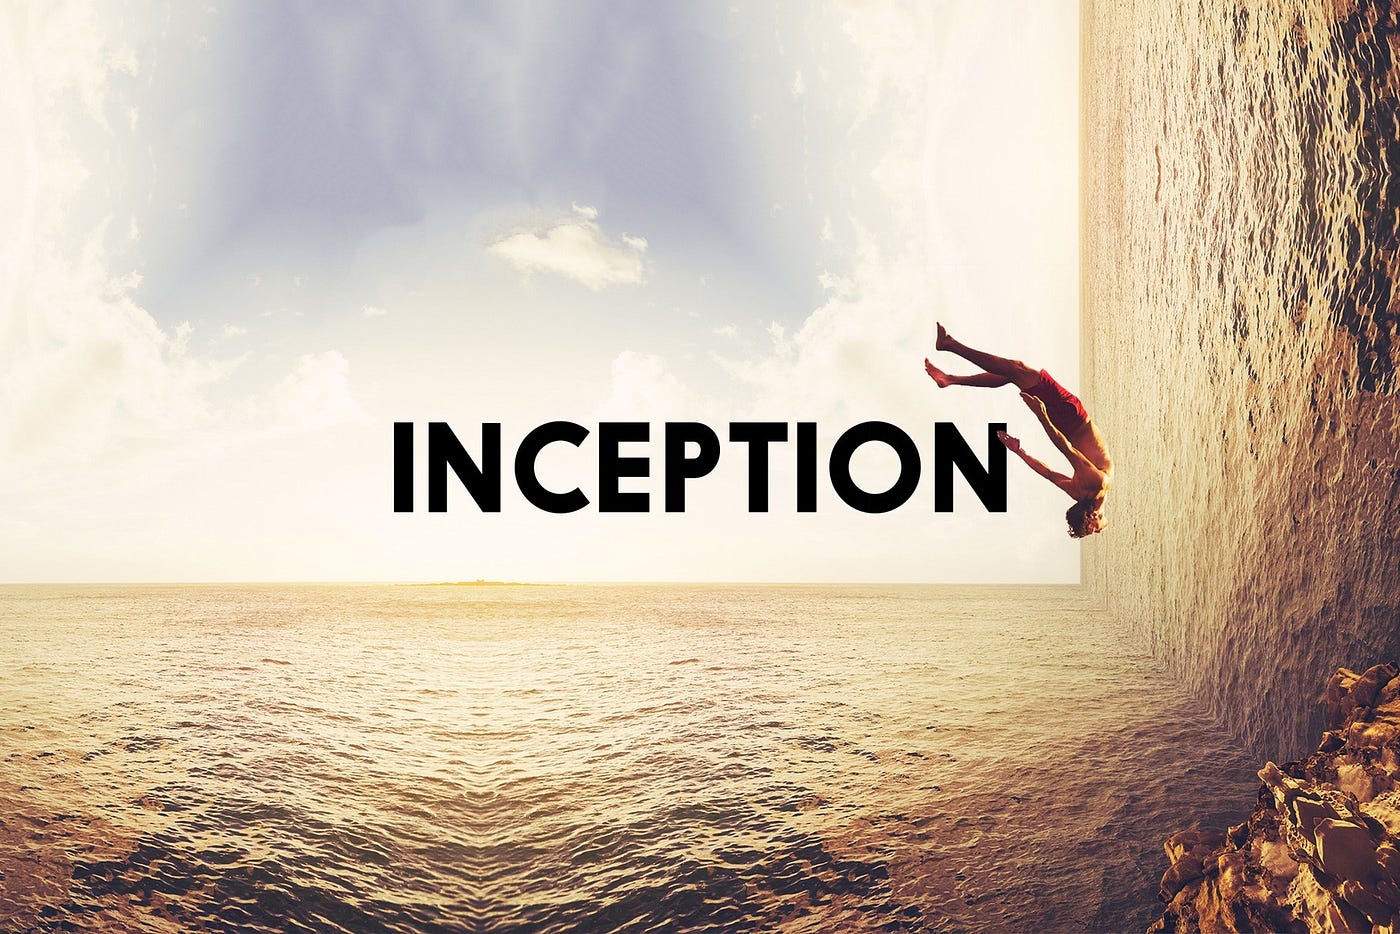 Inception, The Philosophy Of Mind | by Abdelkader Sellami | Medium